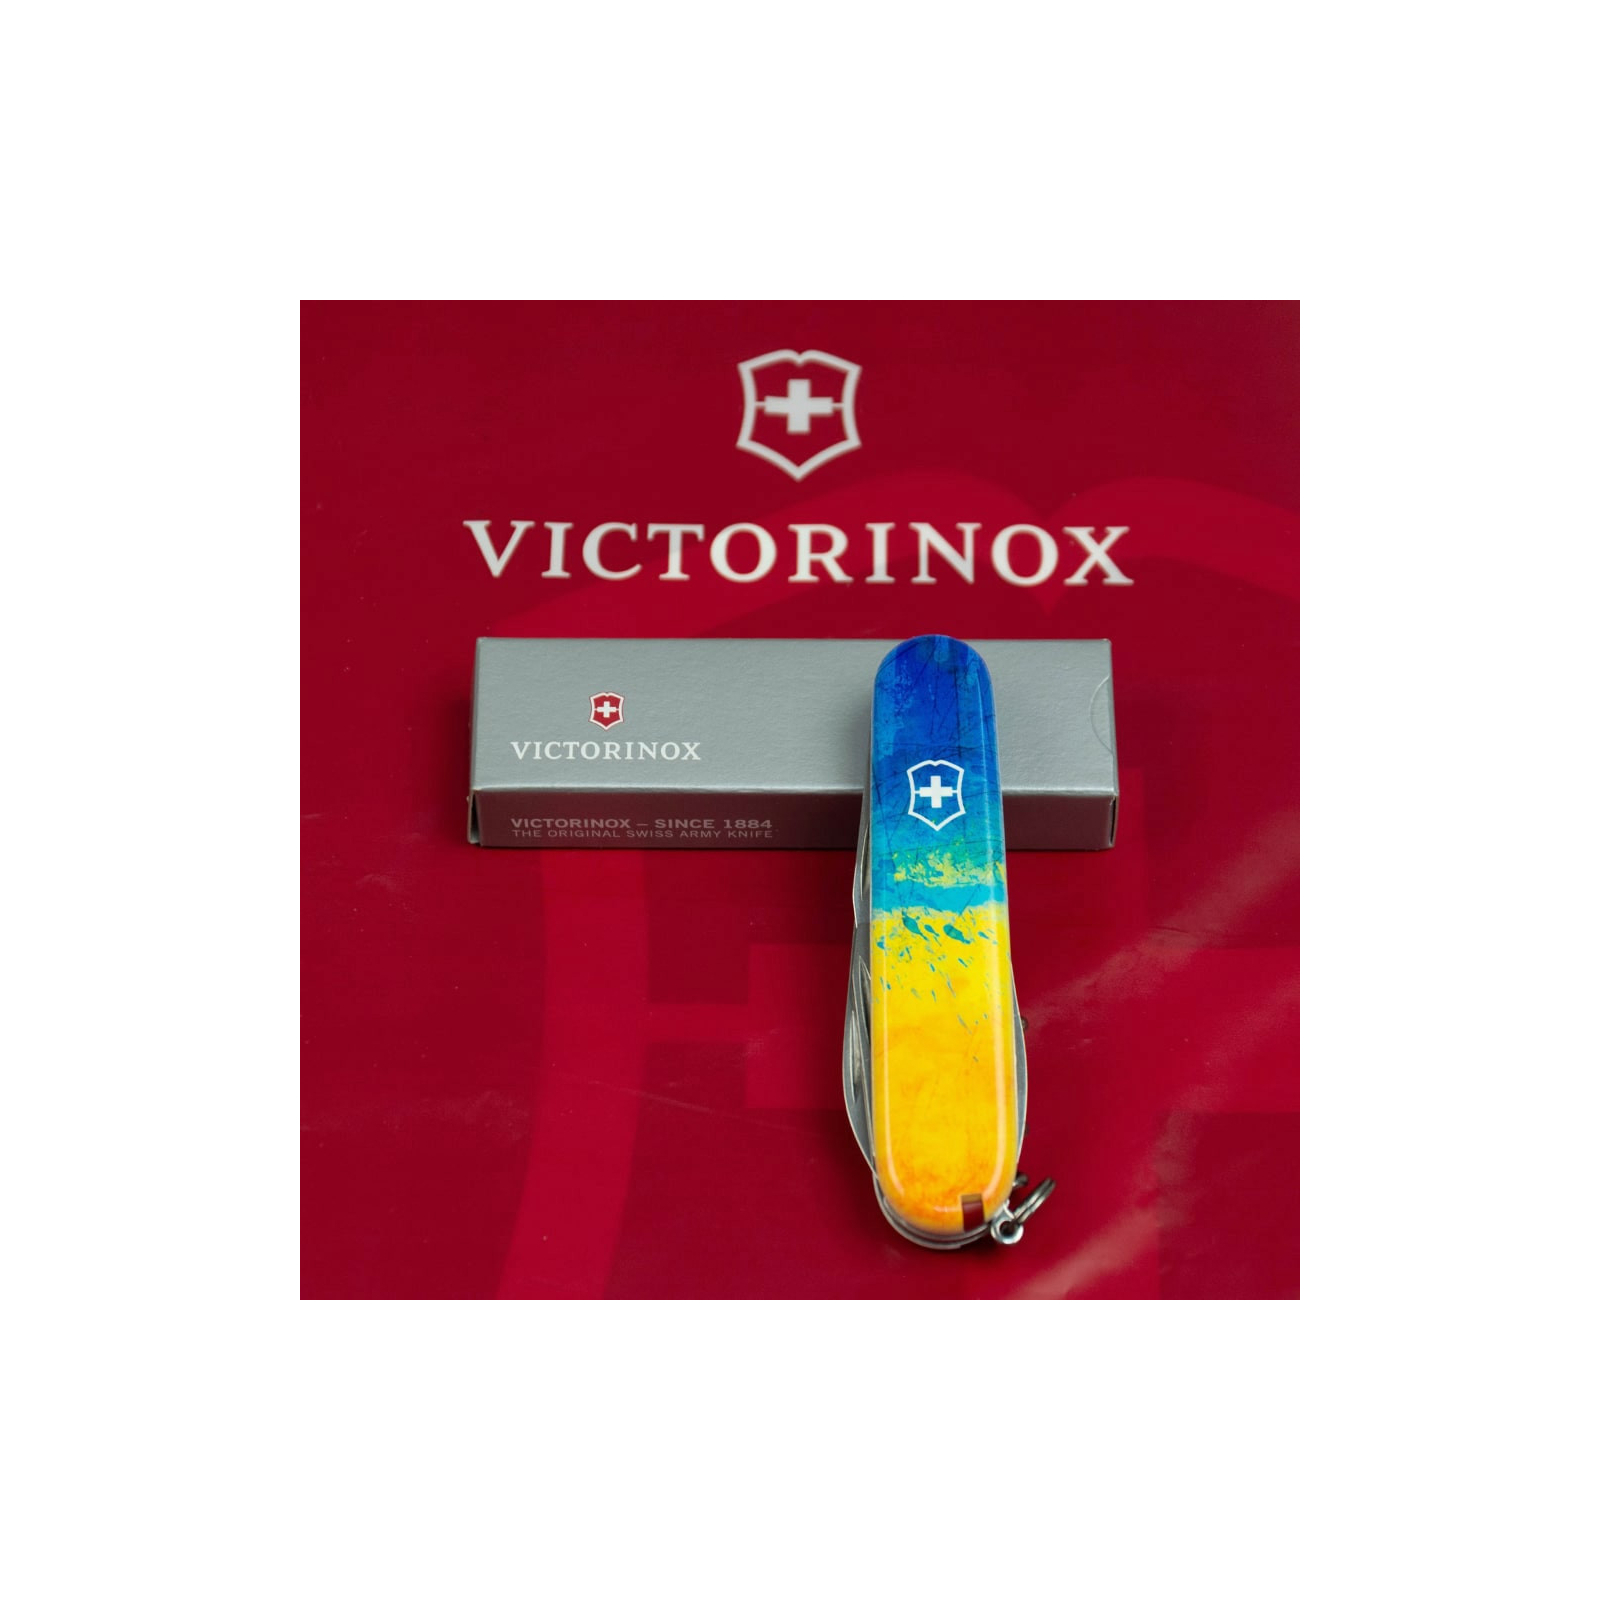 Нож Victorinox Spartan Ukraine 91 мм Жовто-синій малюнок (1.3603.7_T3100p) изображение 12